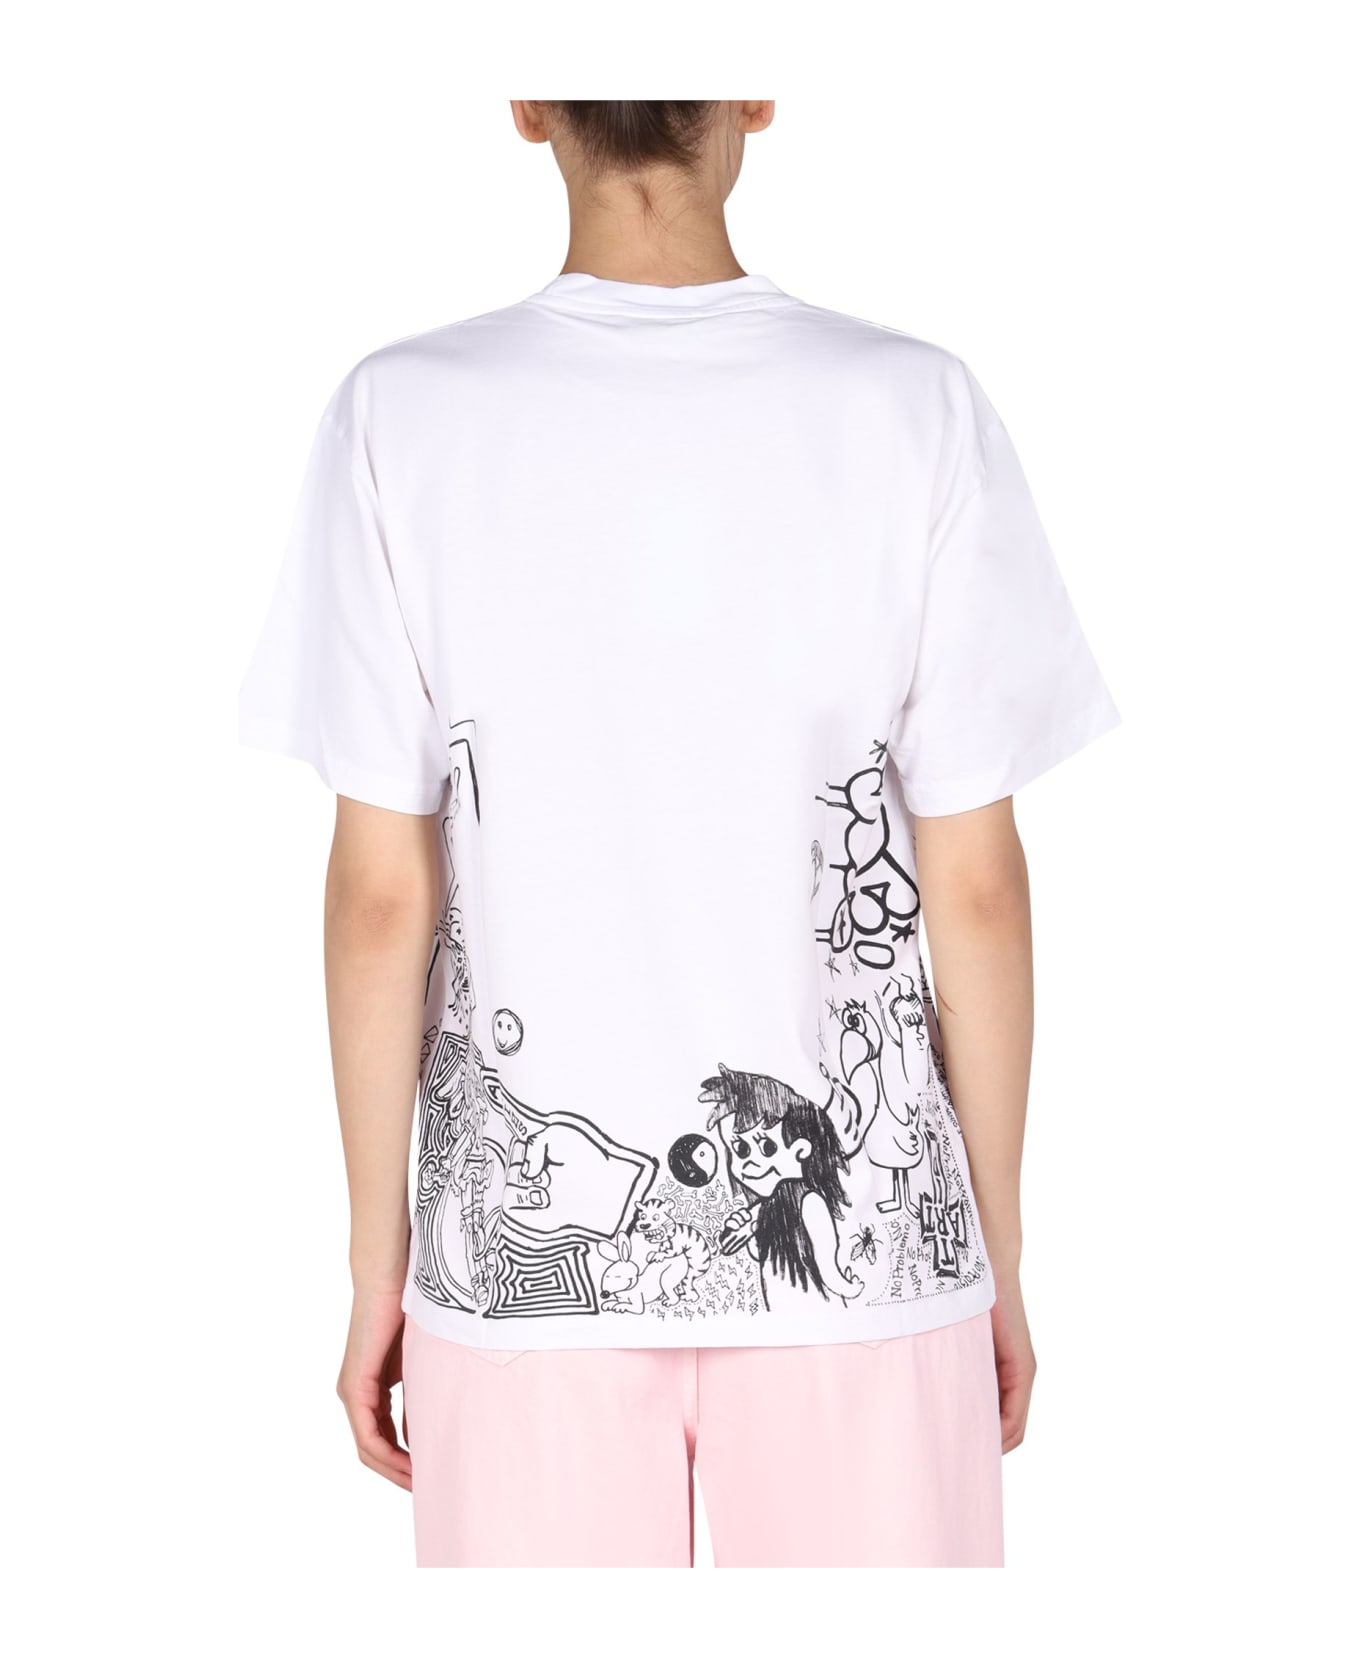 Aries Doodle T-shirt - BIANCO